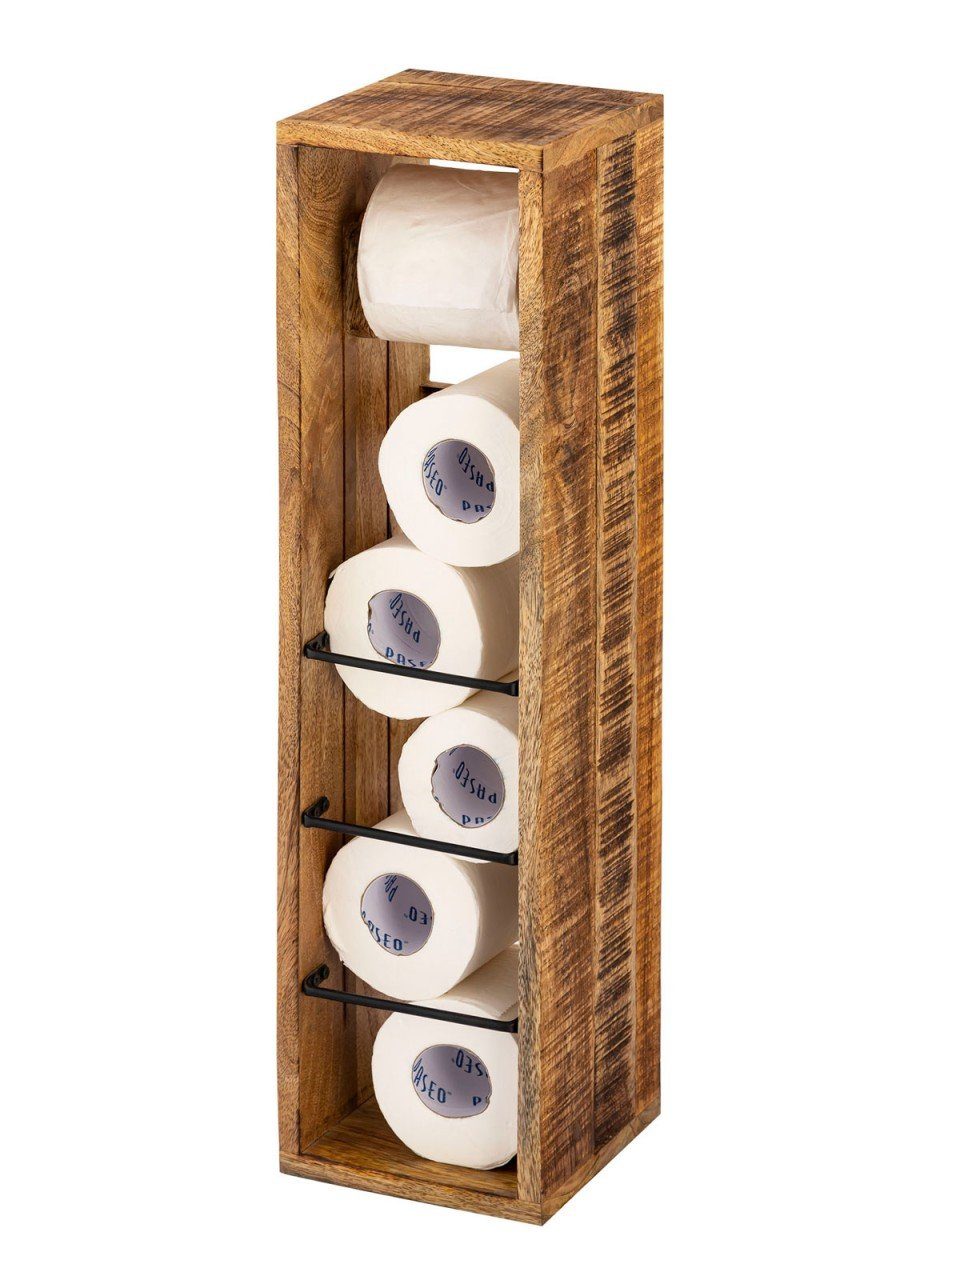 soma Dekofigur Toilettenpapierhalter Holz 17x17cm Klopapierhalter